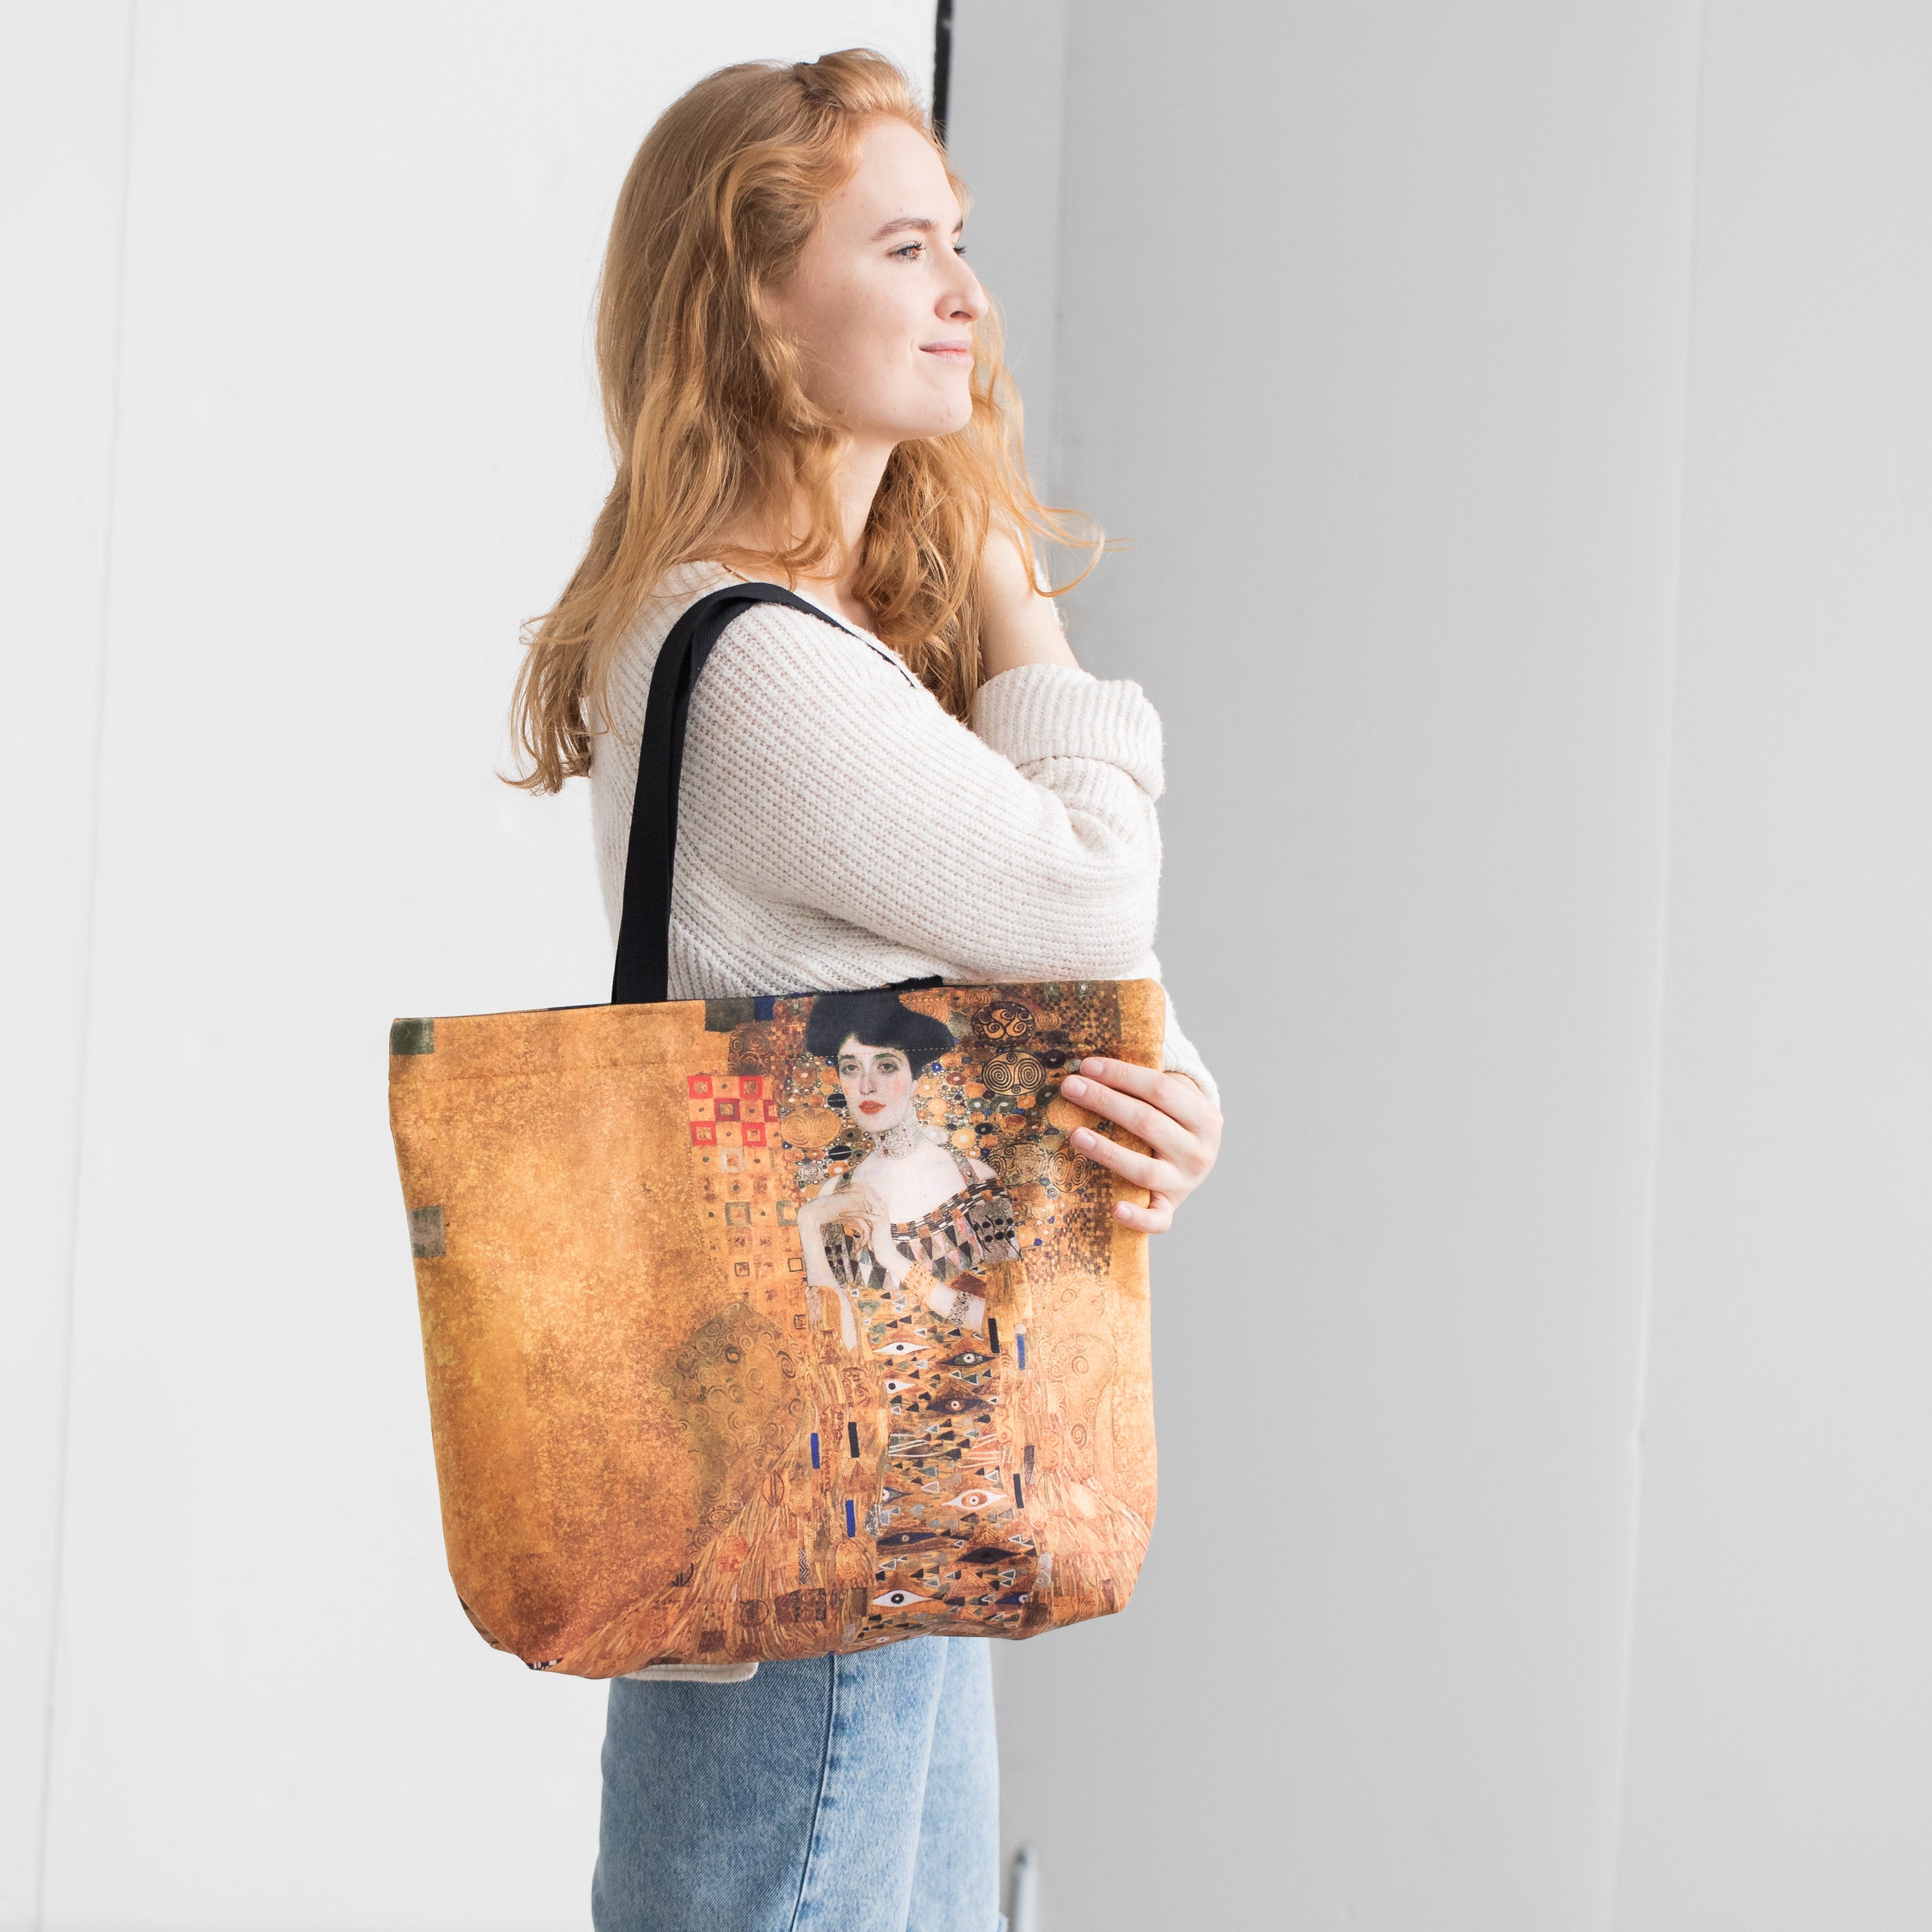 Pirkinių krepšys Gustav Klimt "Adele"